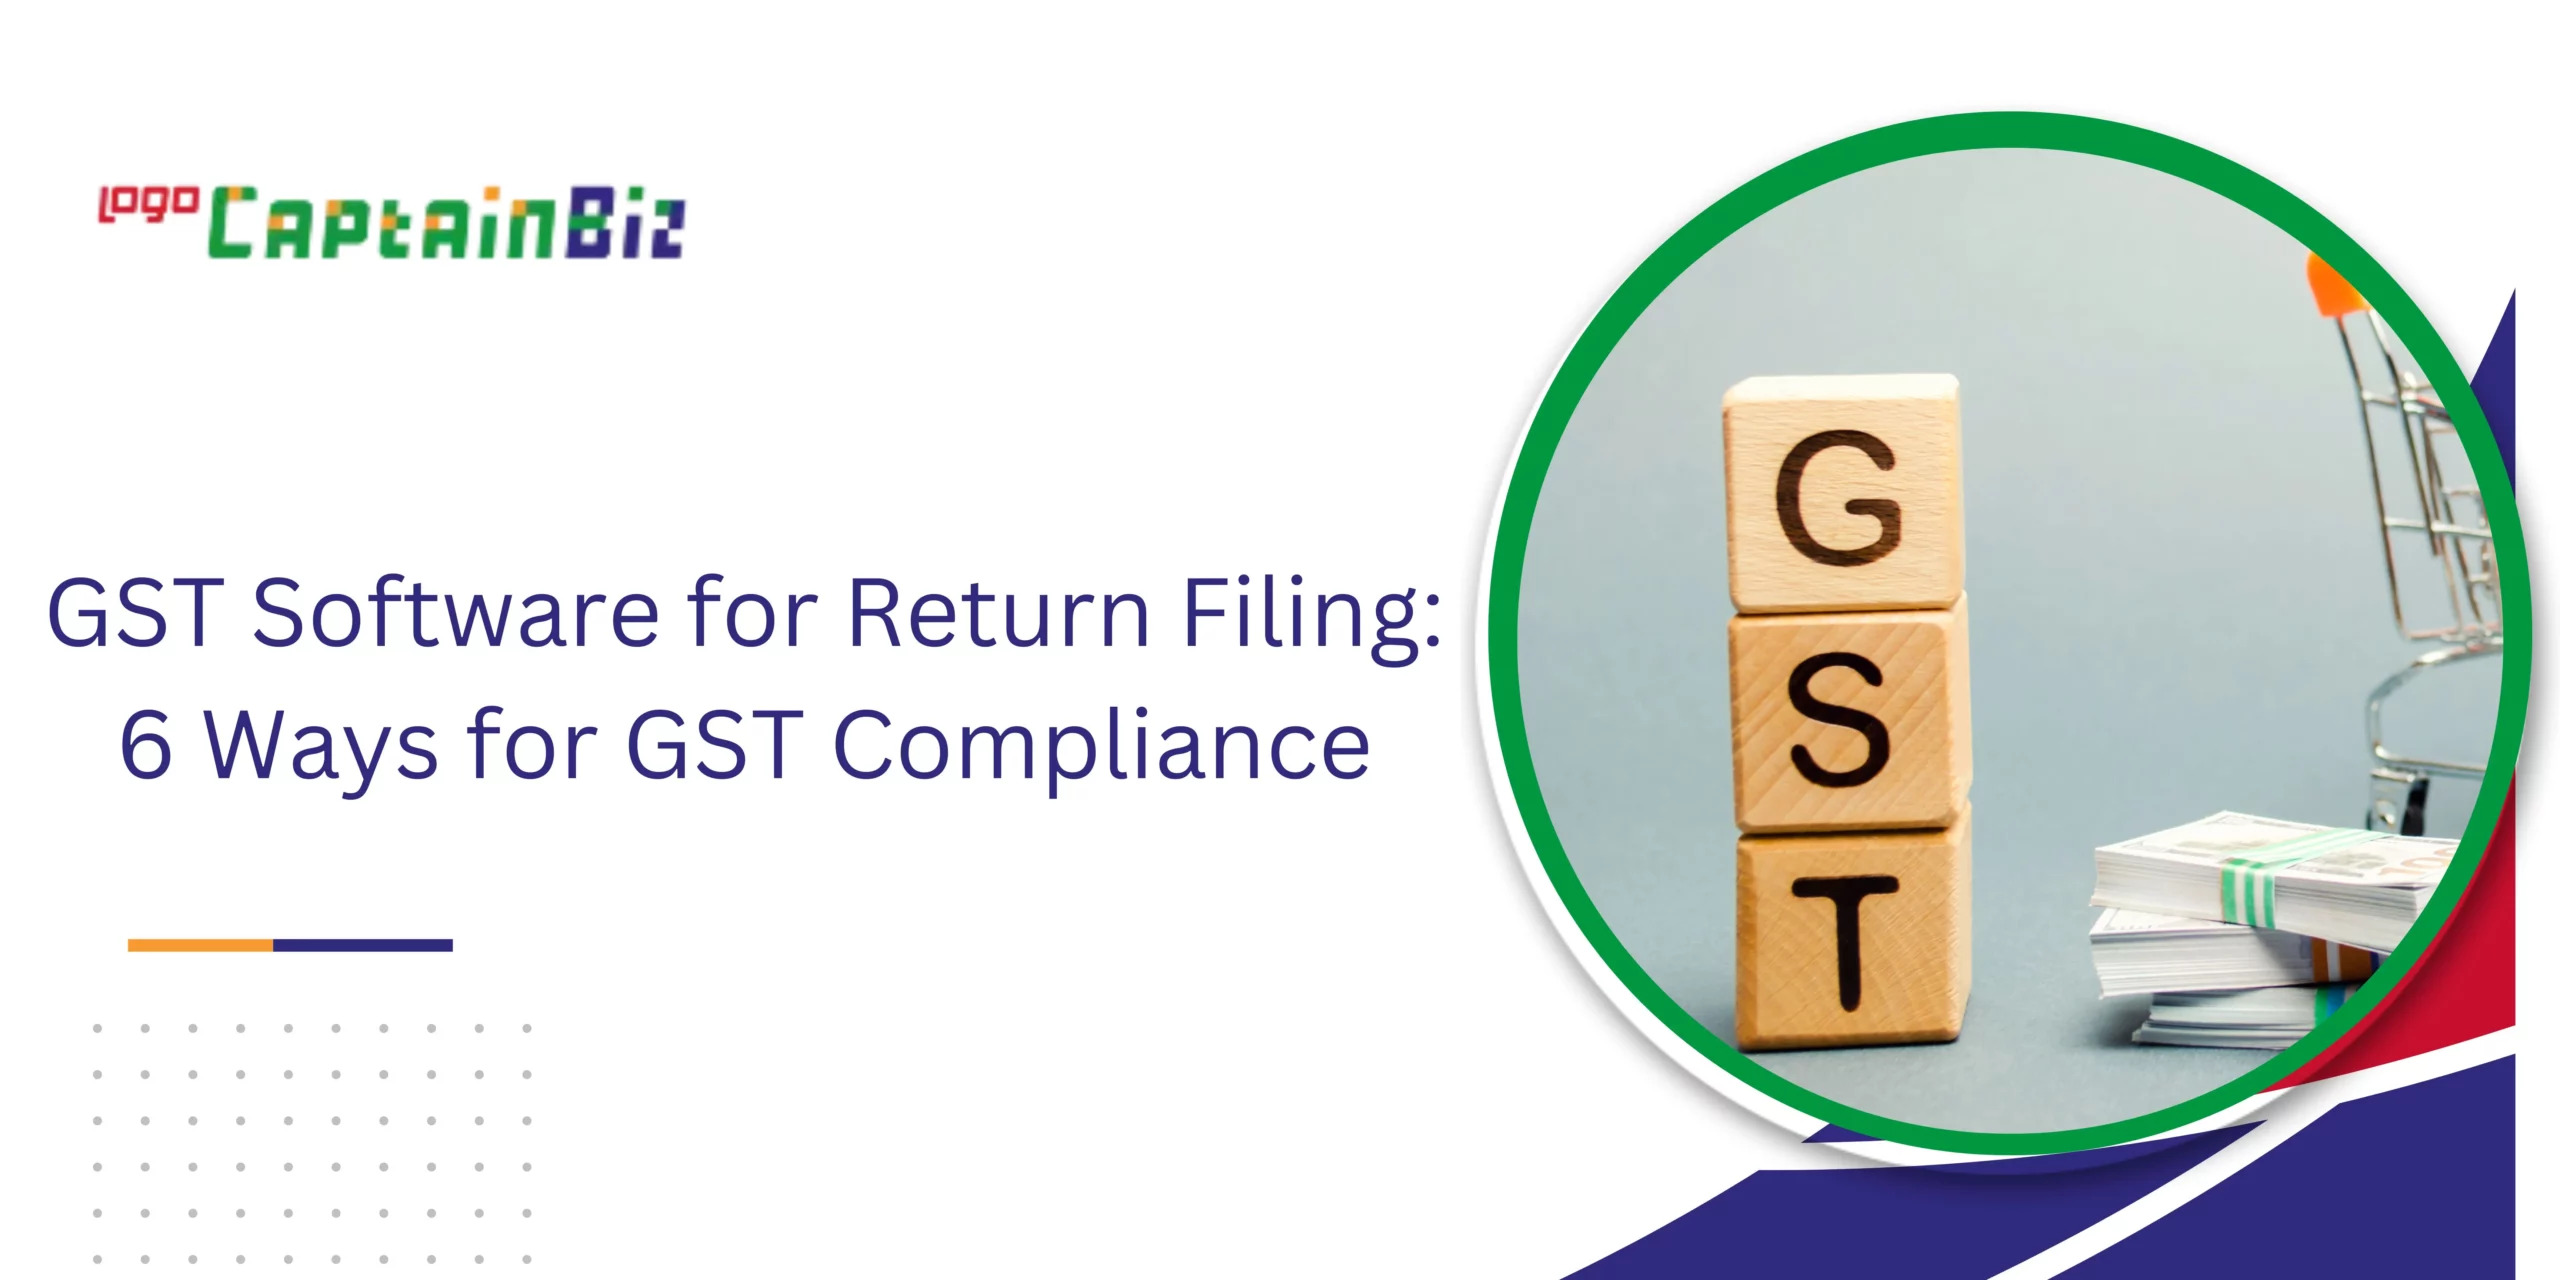 captainbiz gst software for return filing ways for gst compliance